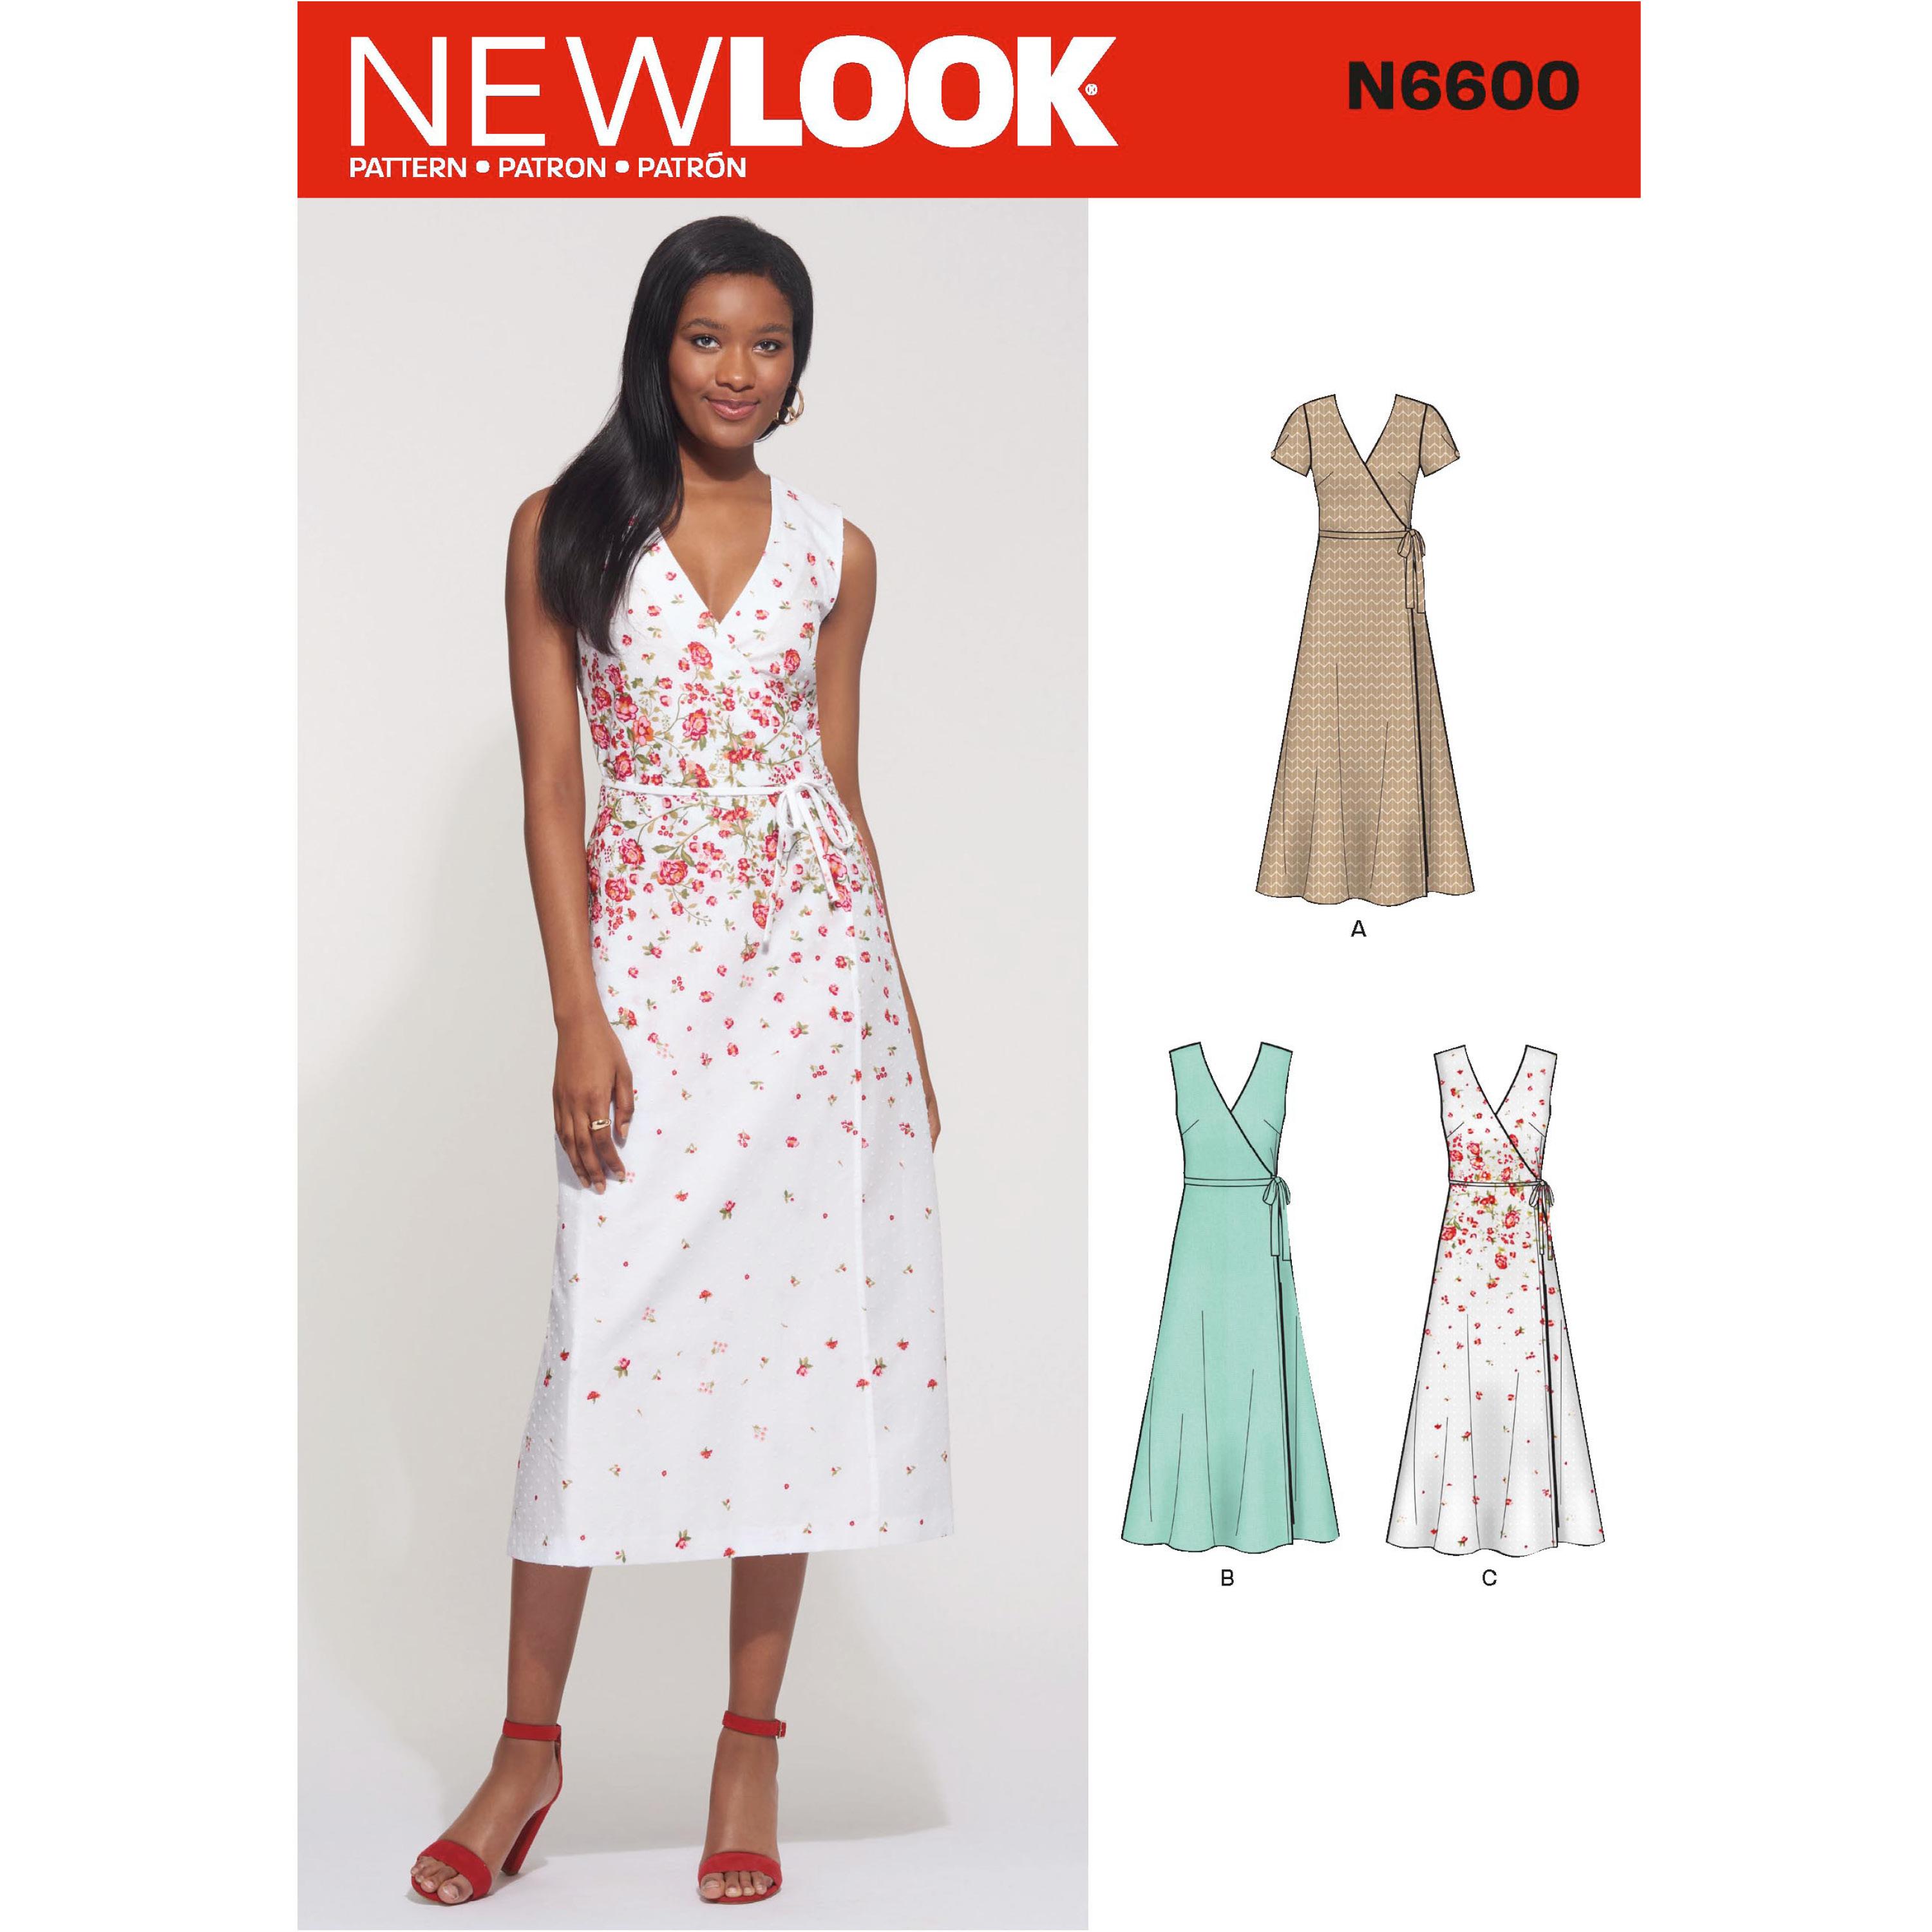 NewLook Sewing Pattern N6600 Misses' Wrap Dress